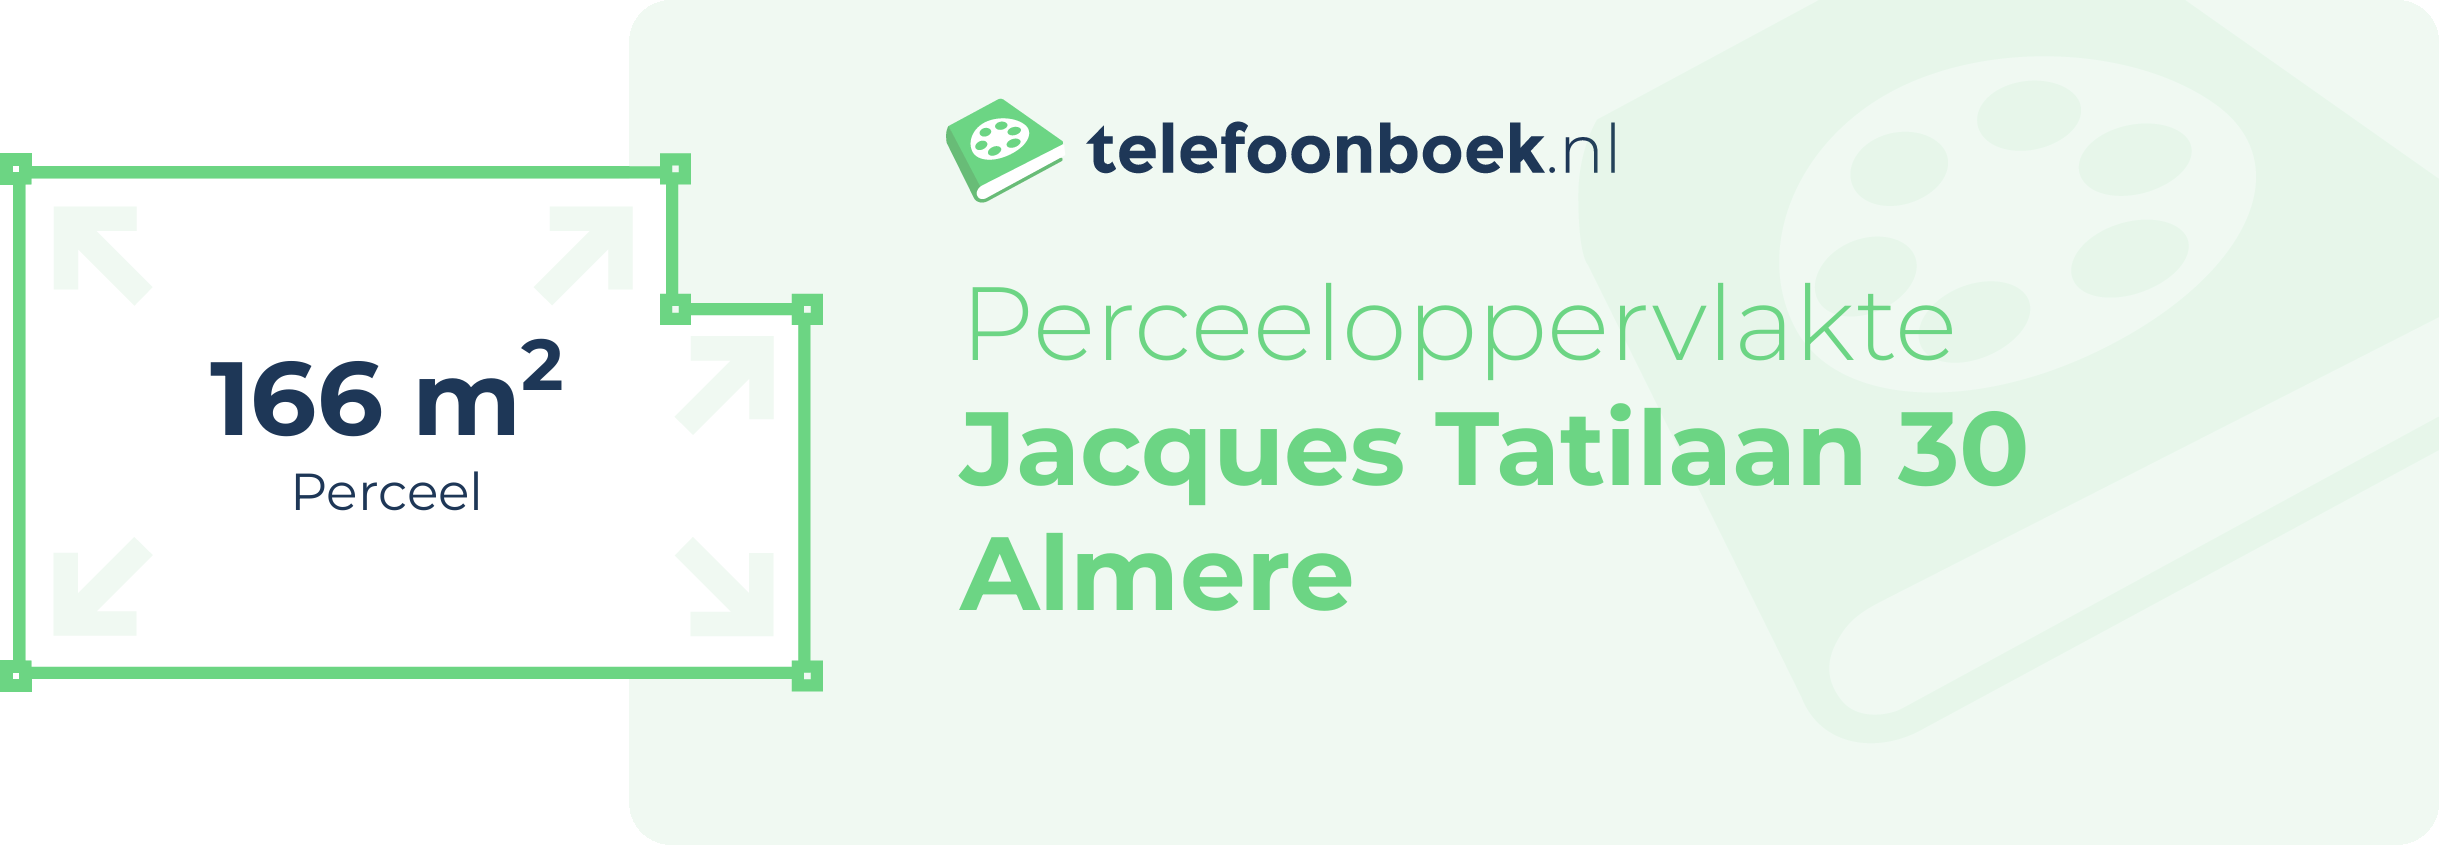 Perceeloppervlakte Jacques Tatilaan 30 Almere